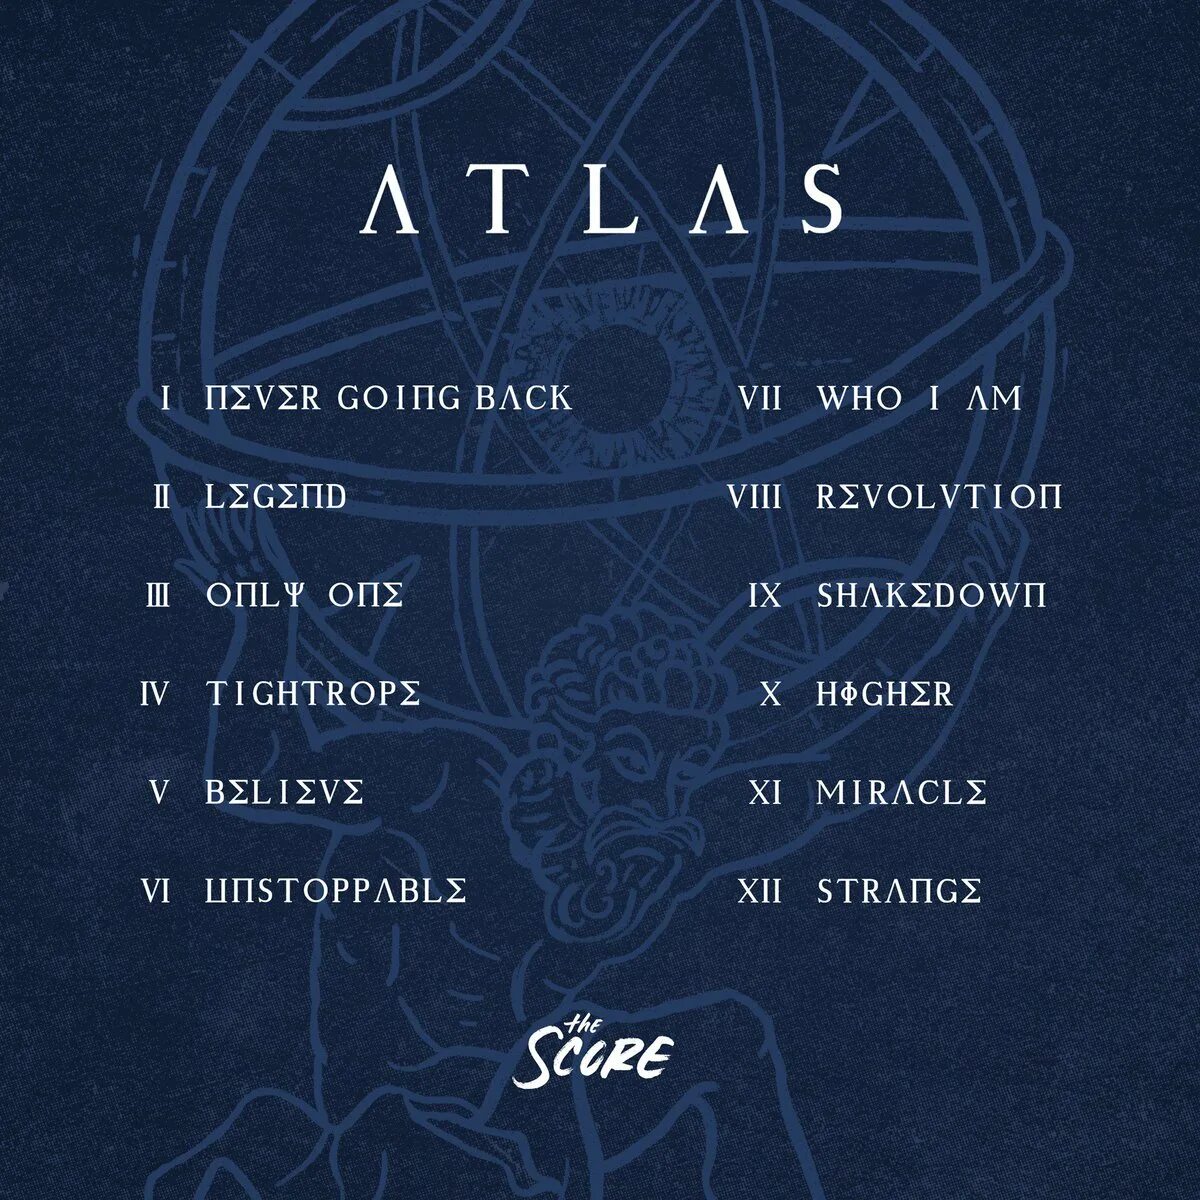 The score. The score Atlas. The score обложка. Атлас альбом the score. The score Atlas обложка.